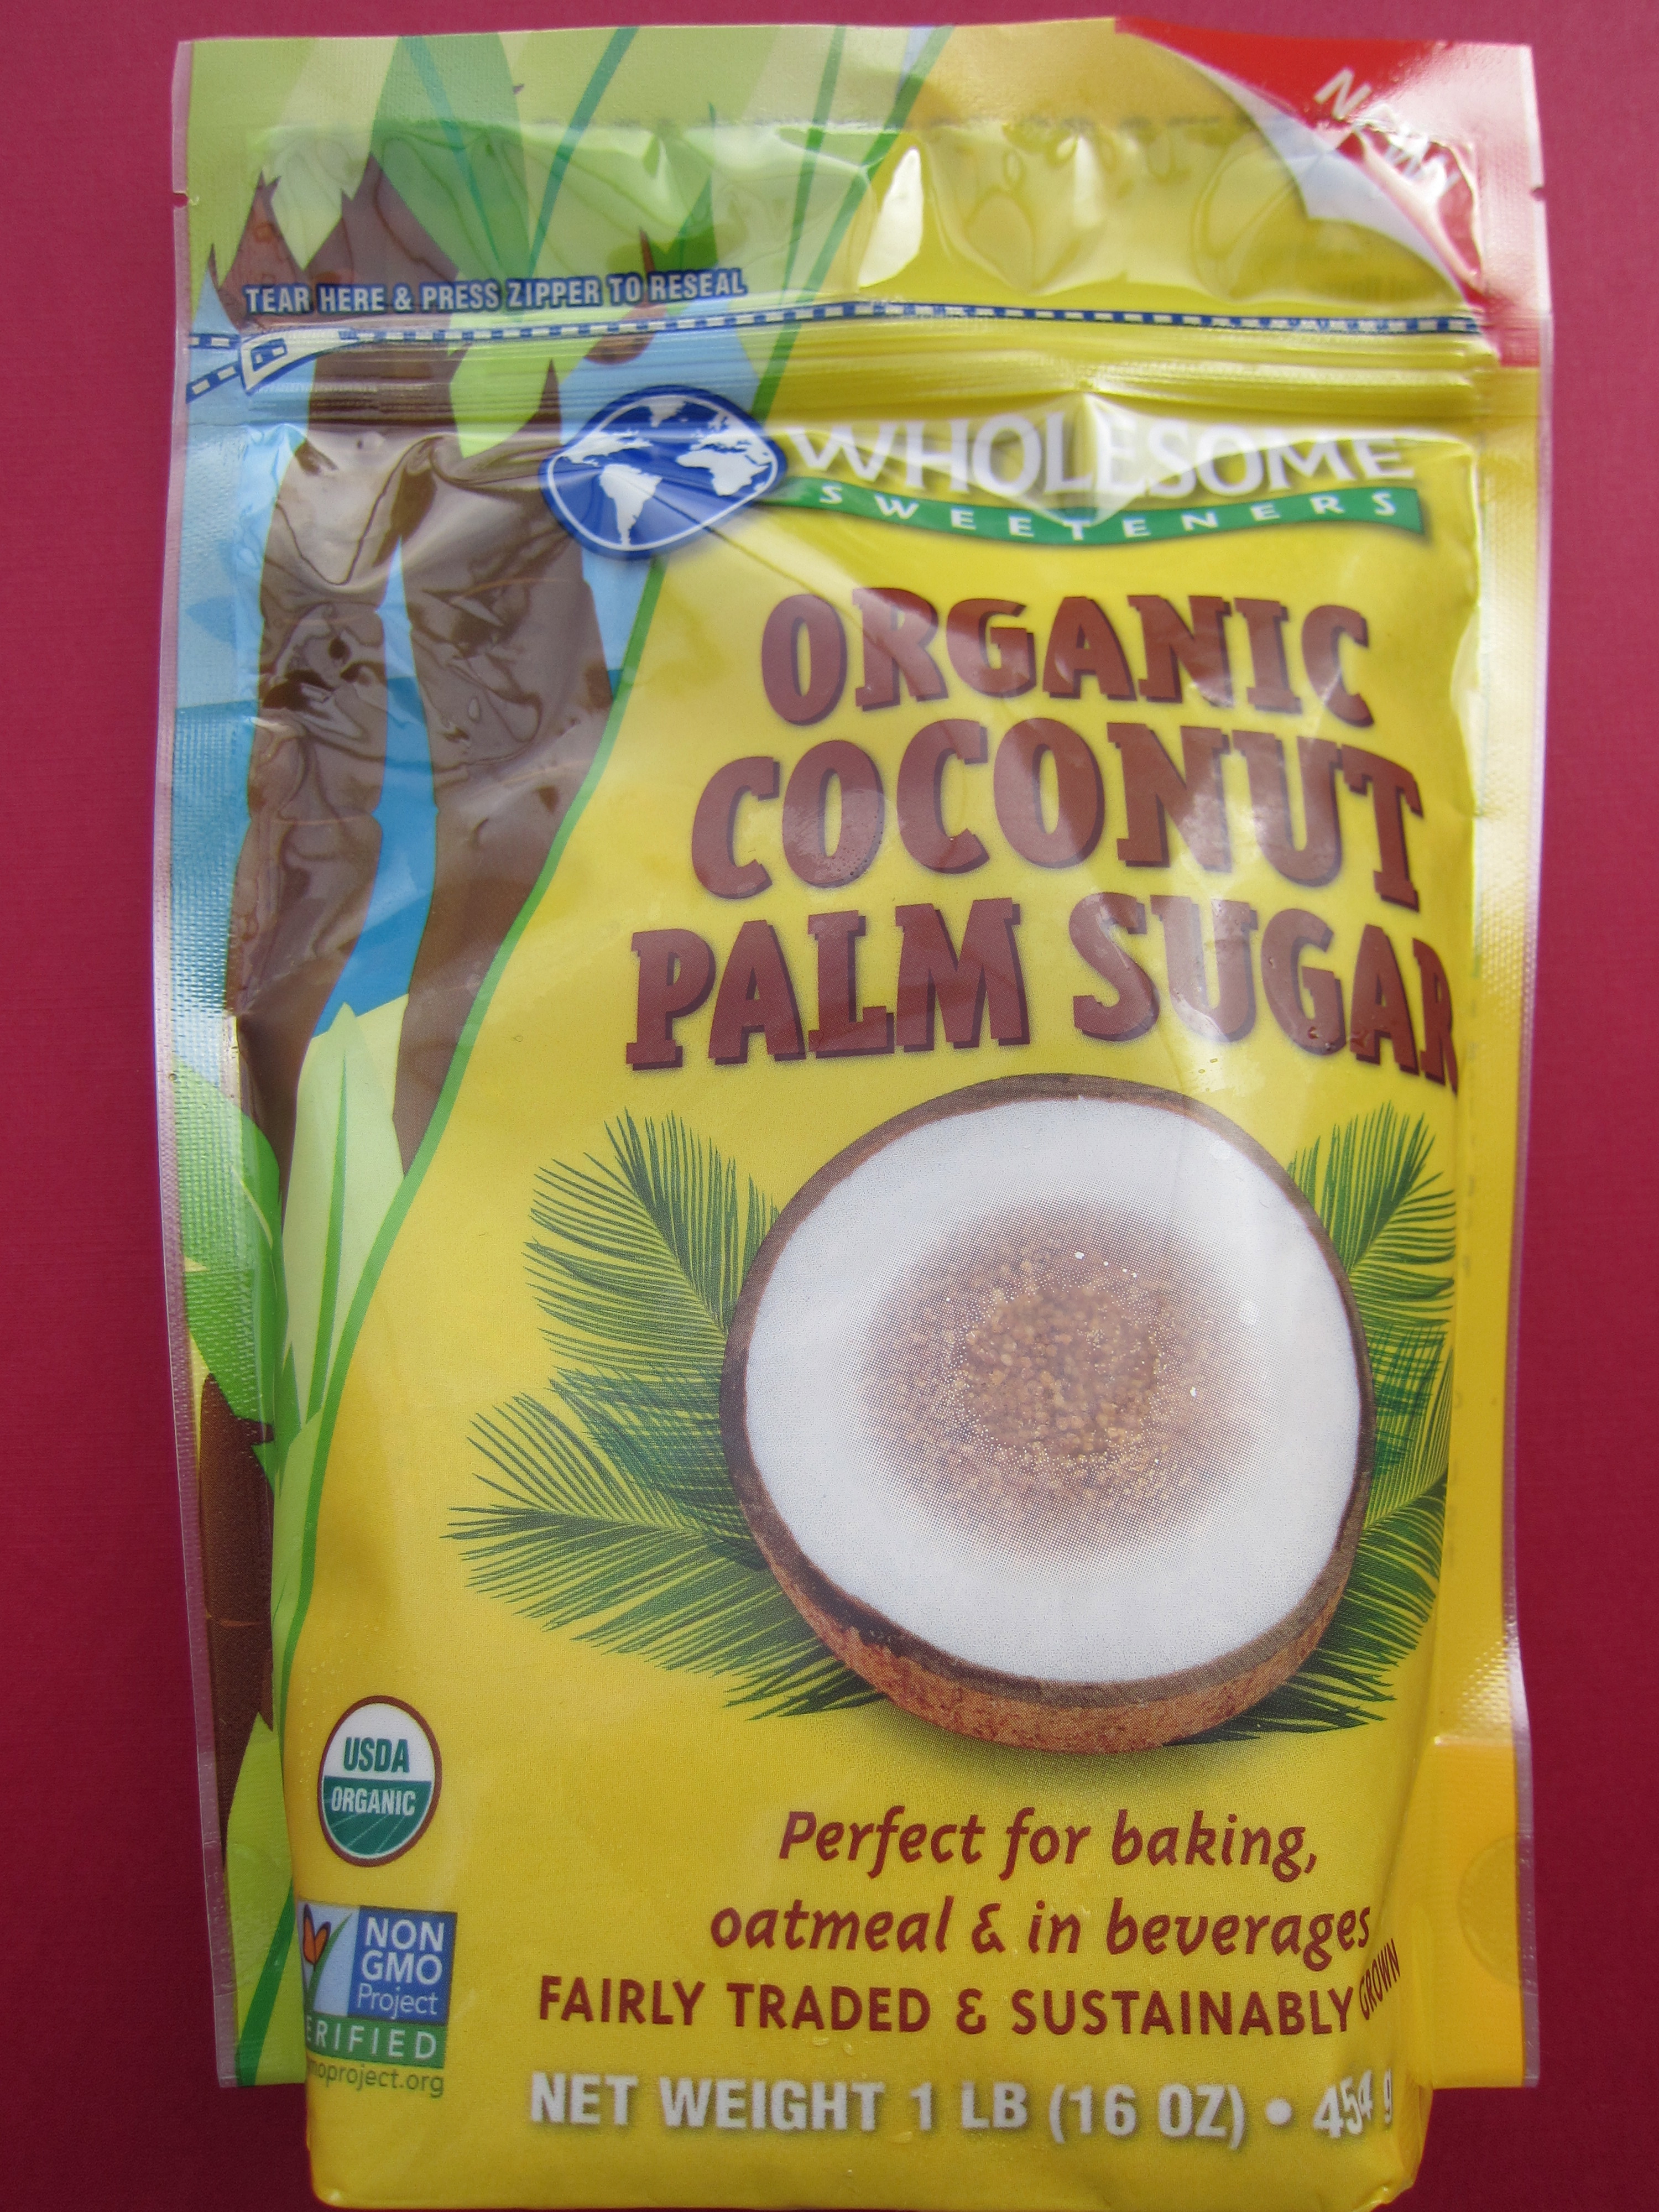 A bag of coconut palm sugar.